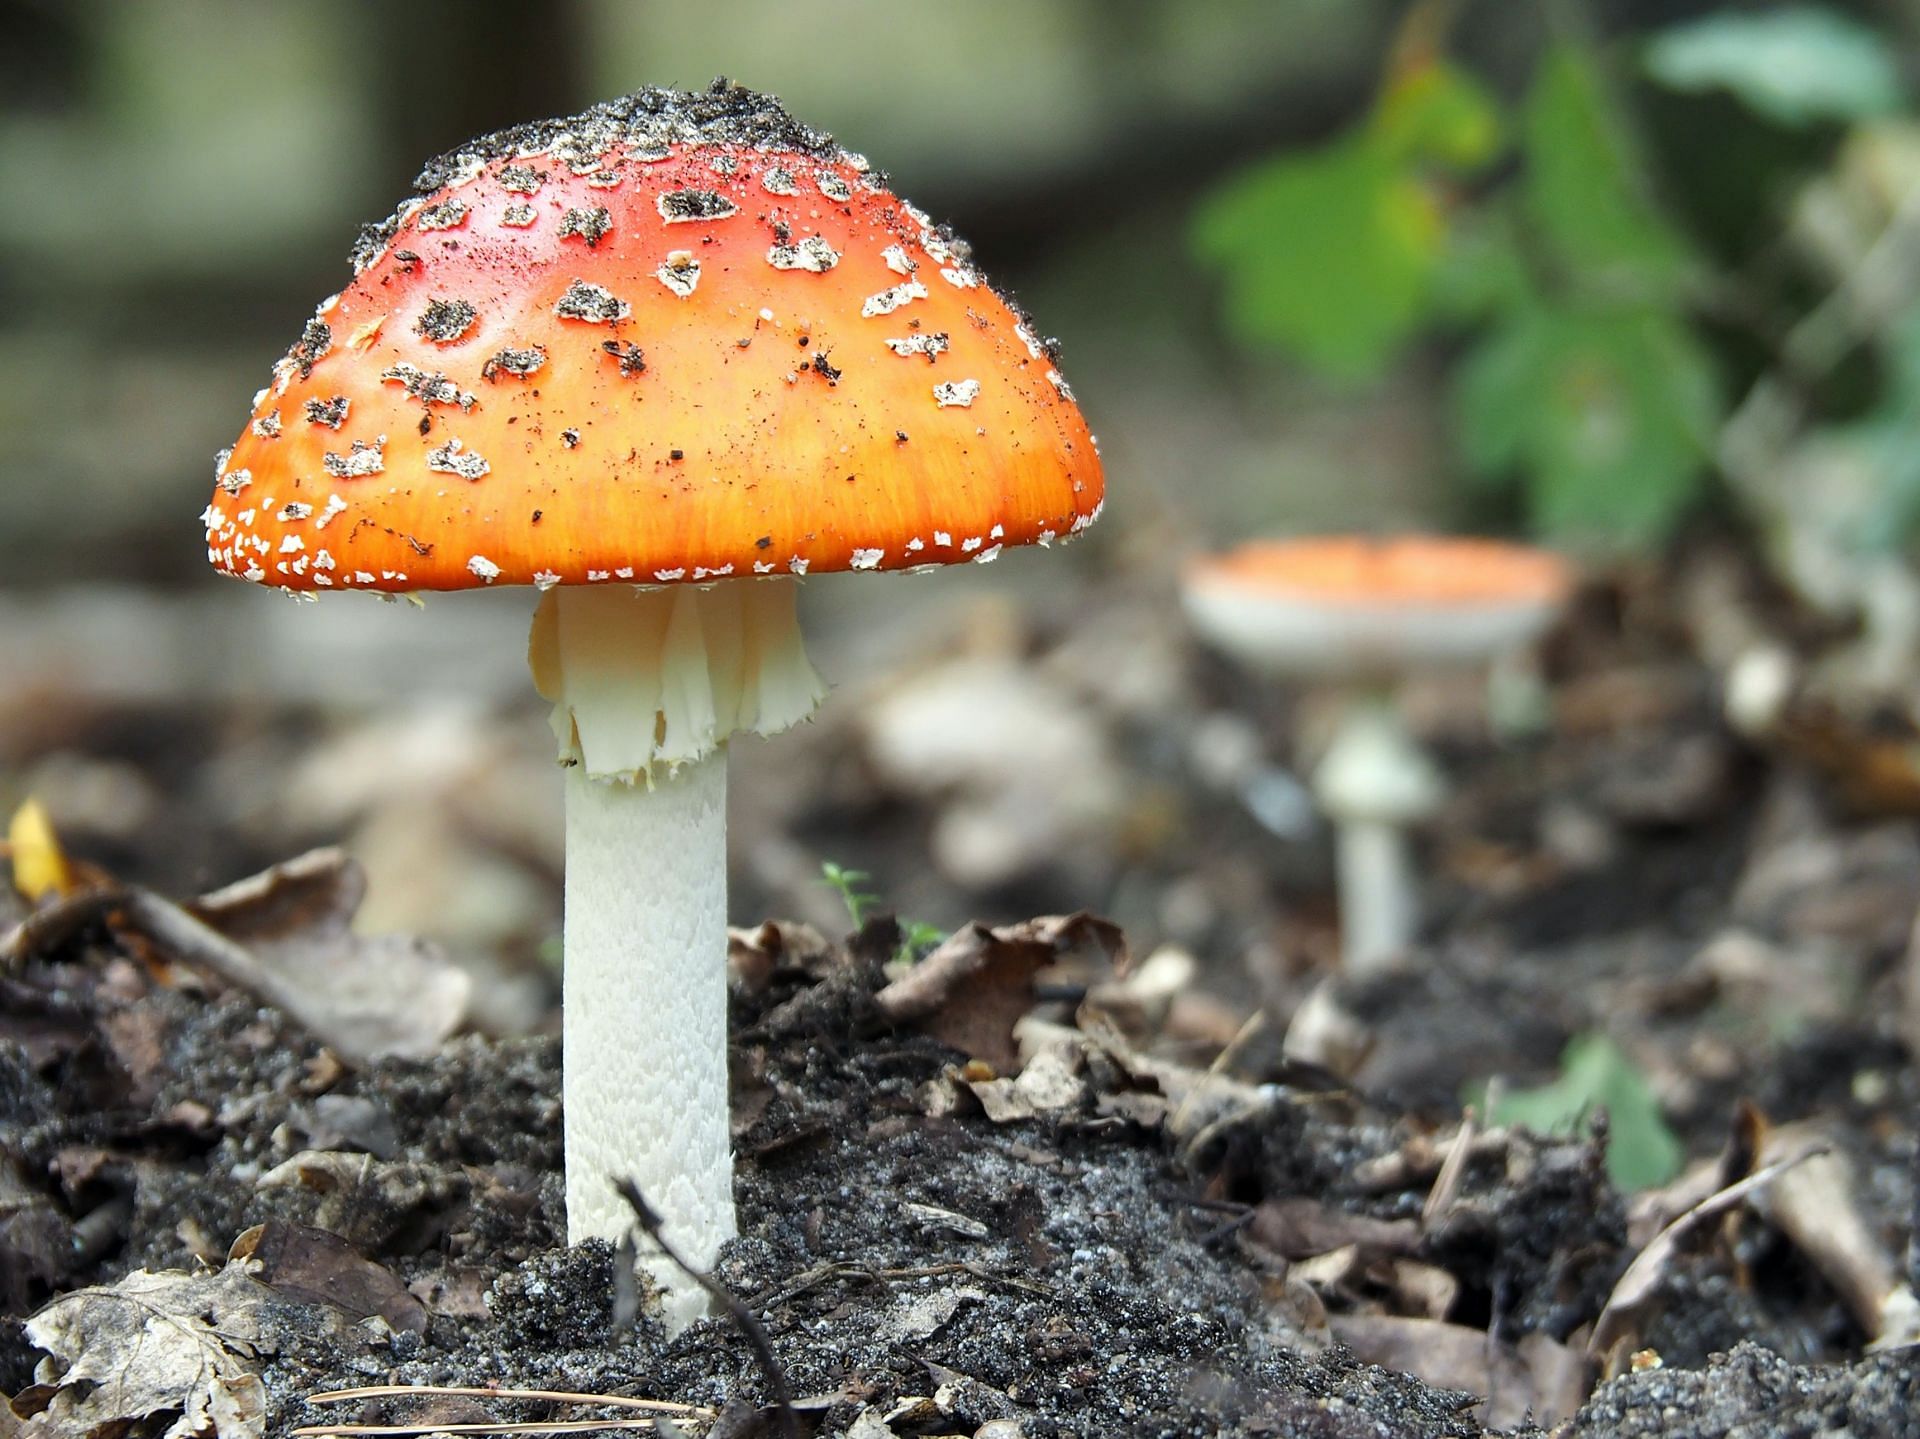 Types of mushrooms (Image via Unsplash/Ed Van Dujin)